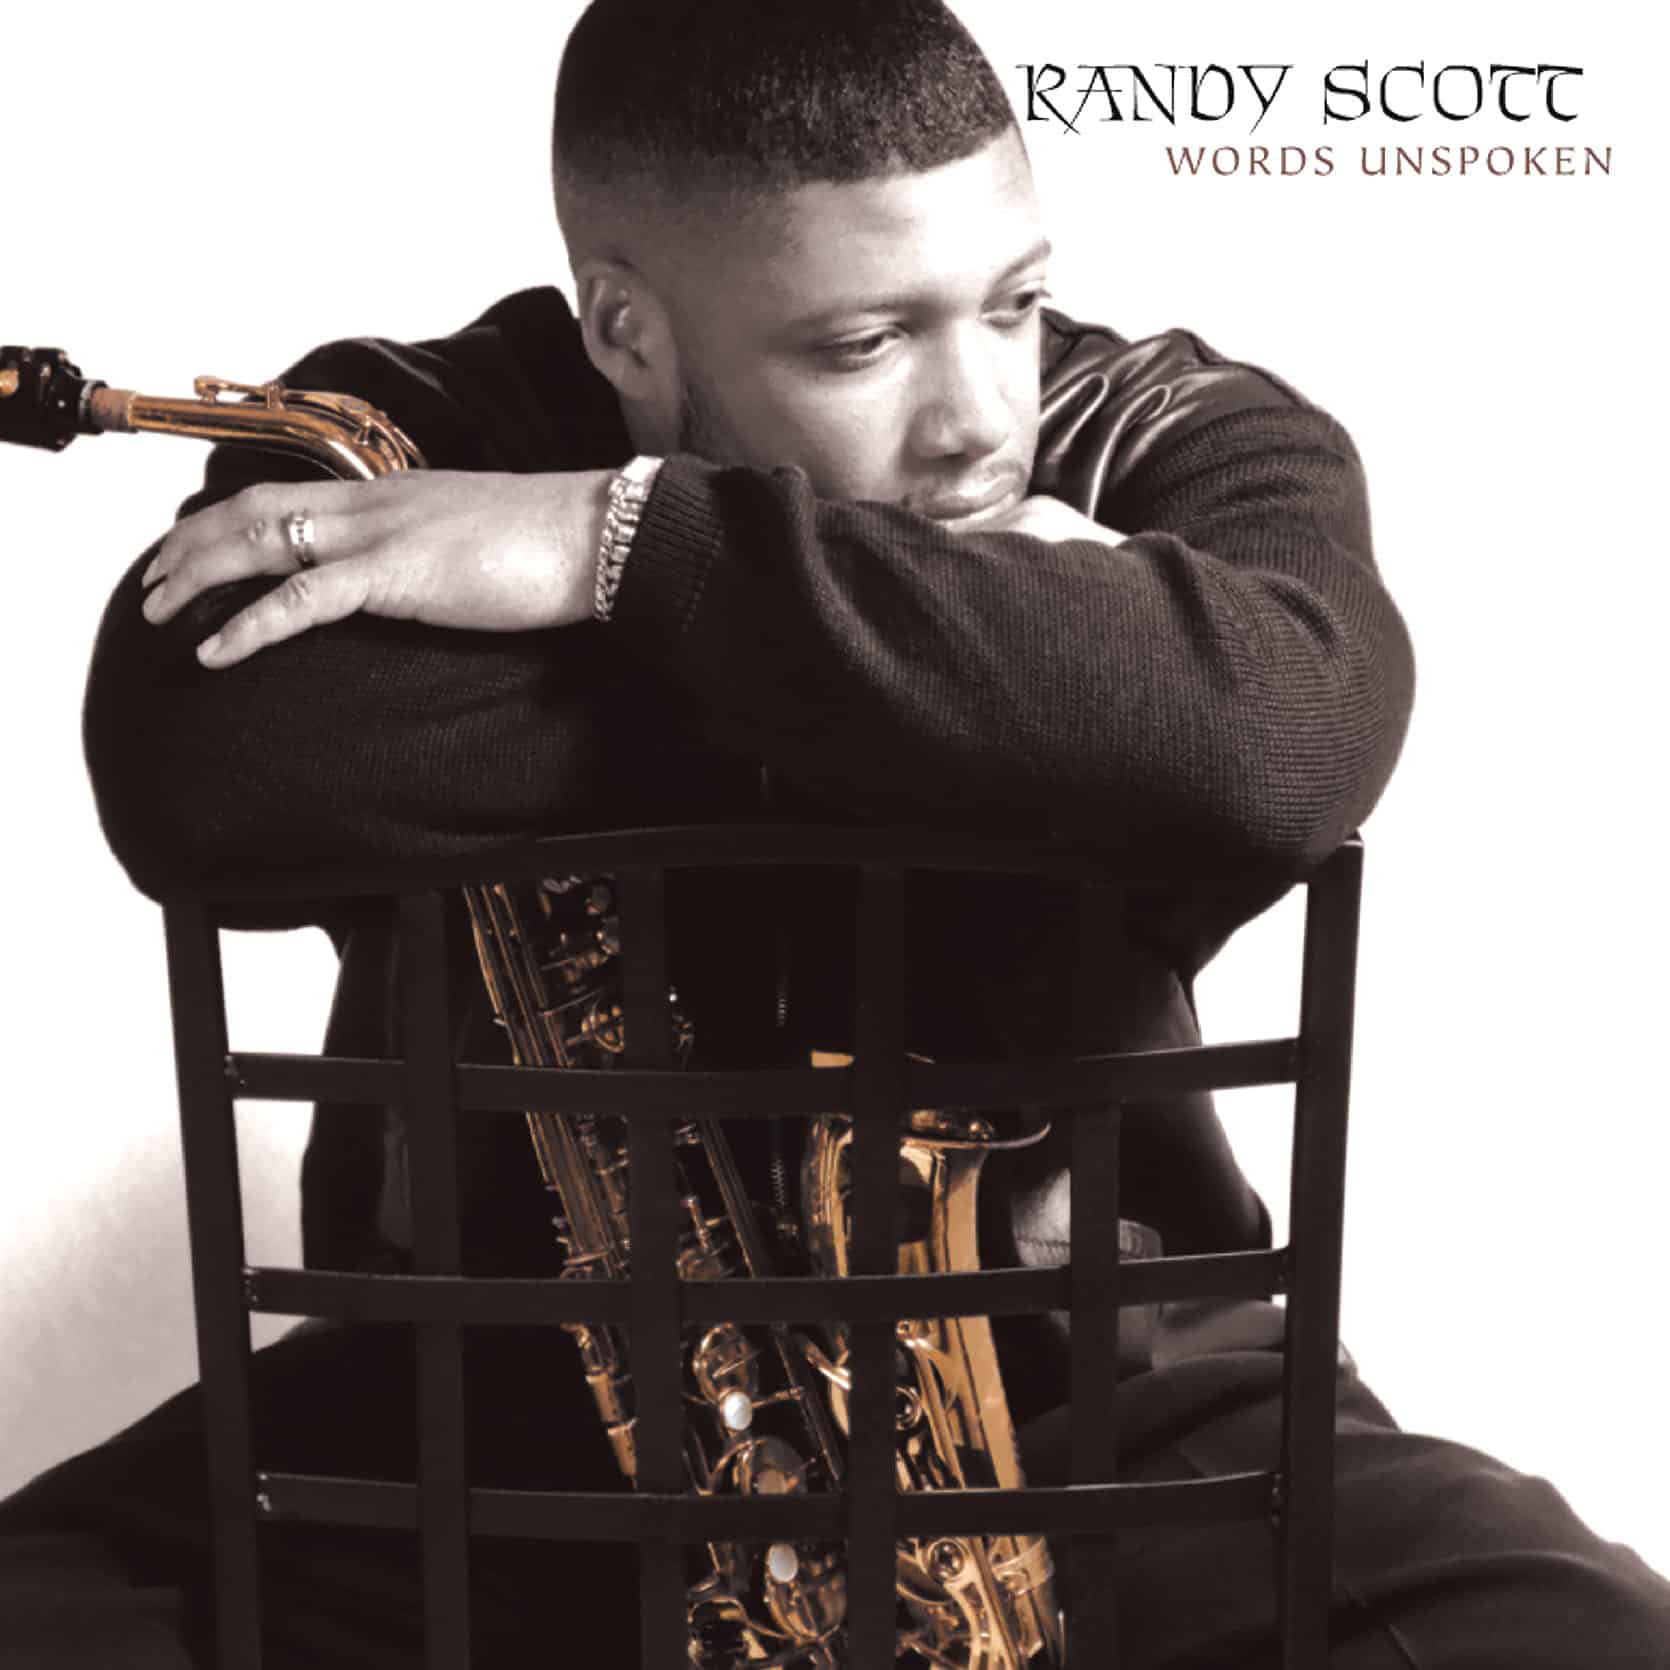 Words Unspoken by Smooth Jazz recording artist Randy Scott